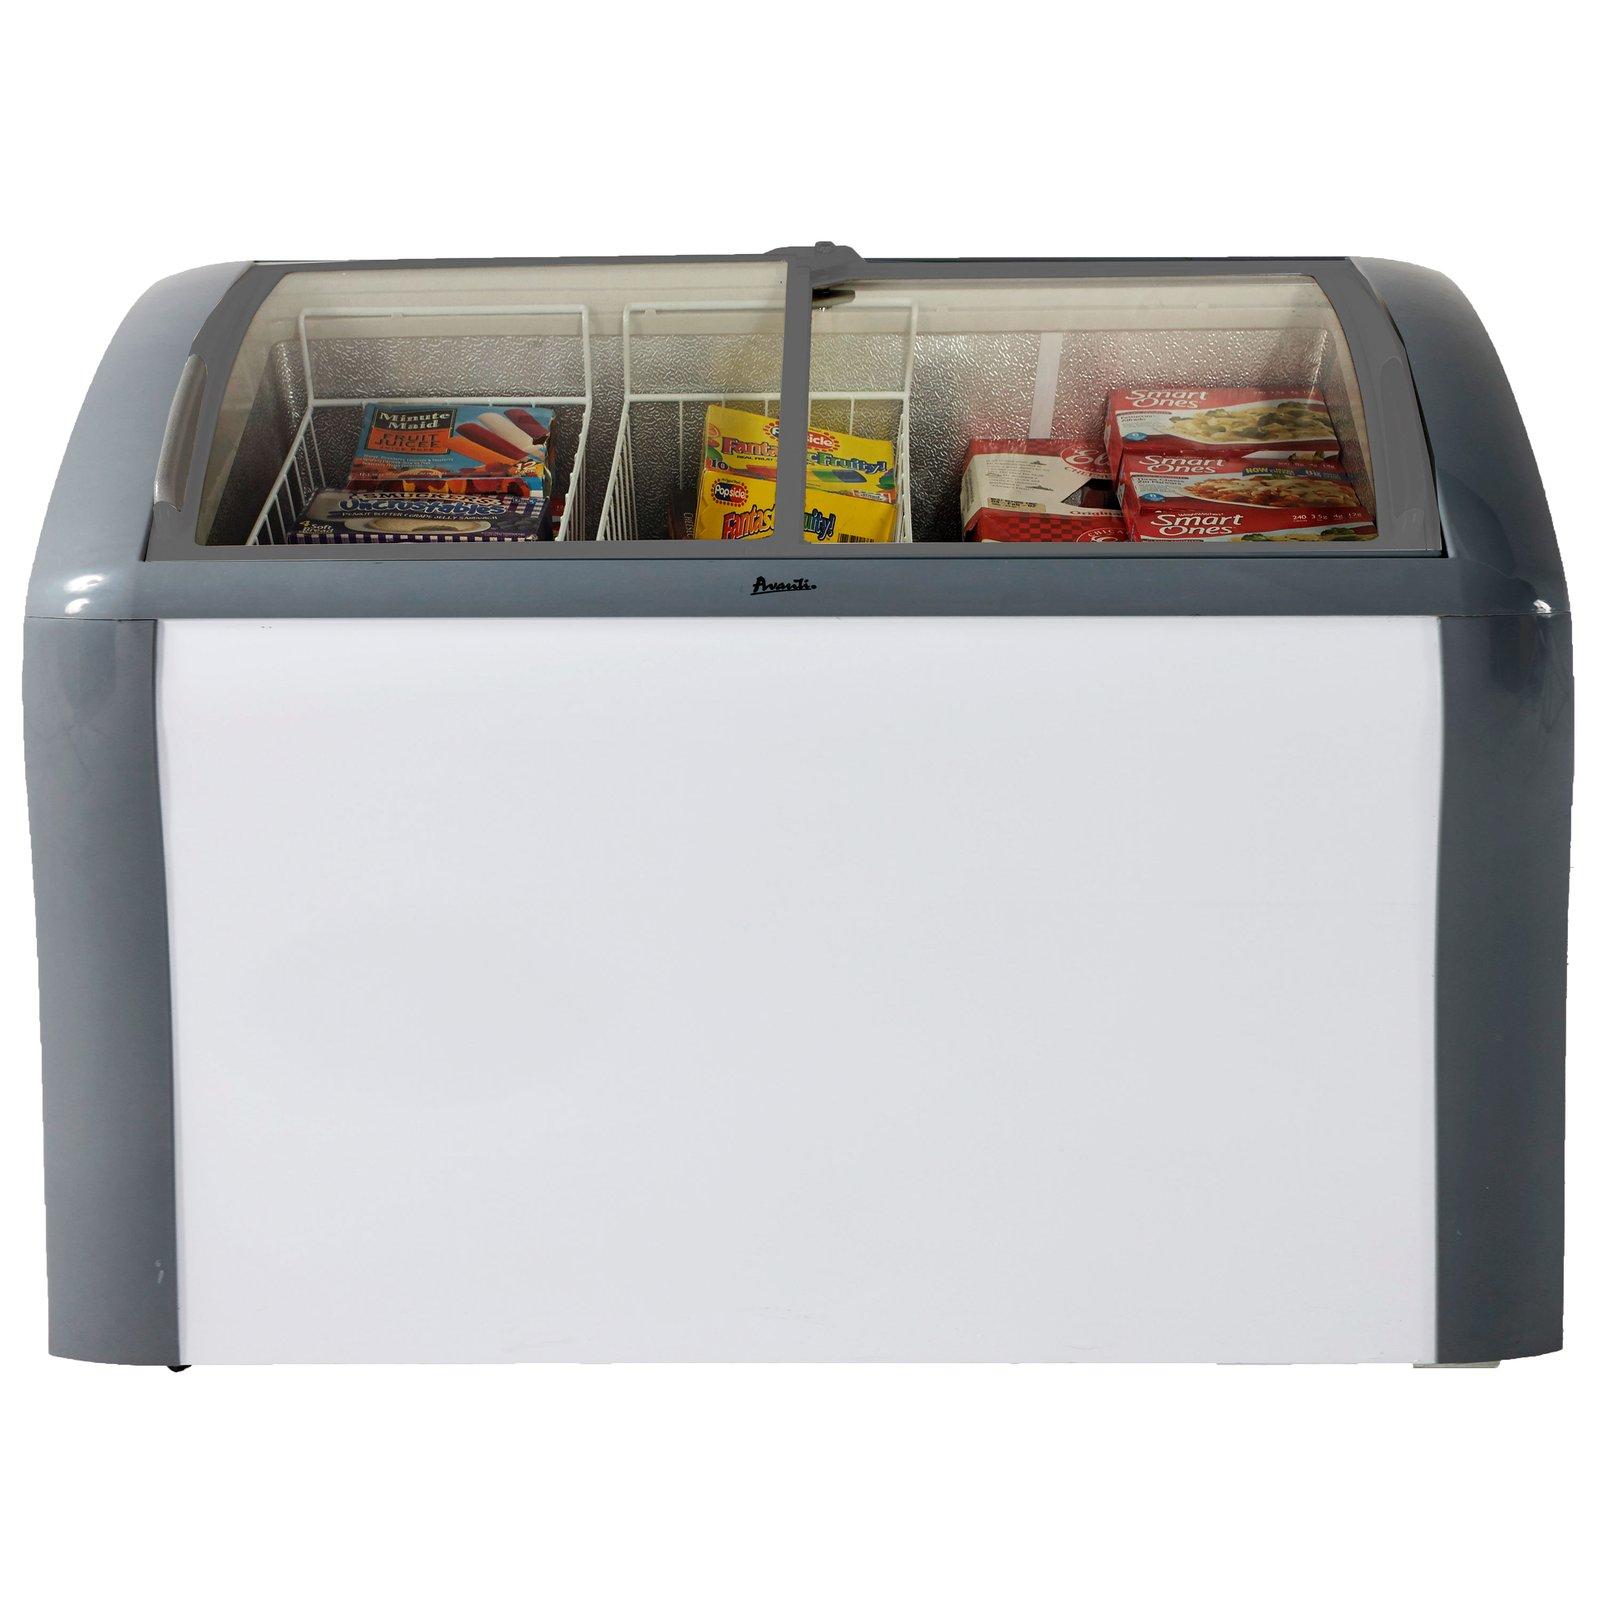 Avanti 8.2 cu. ft. Commercial Refrigerator/Freezer